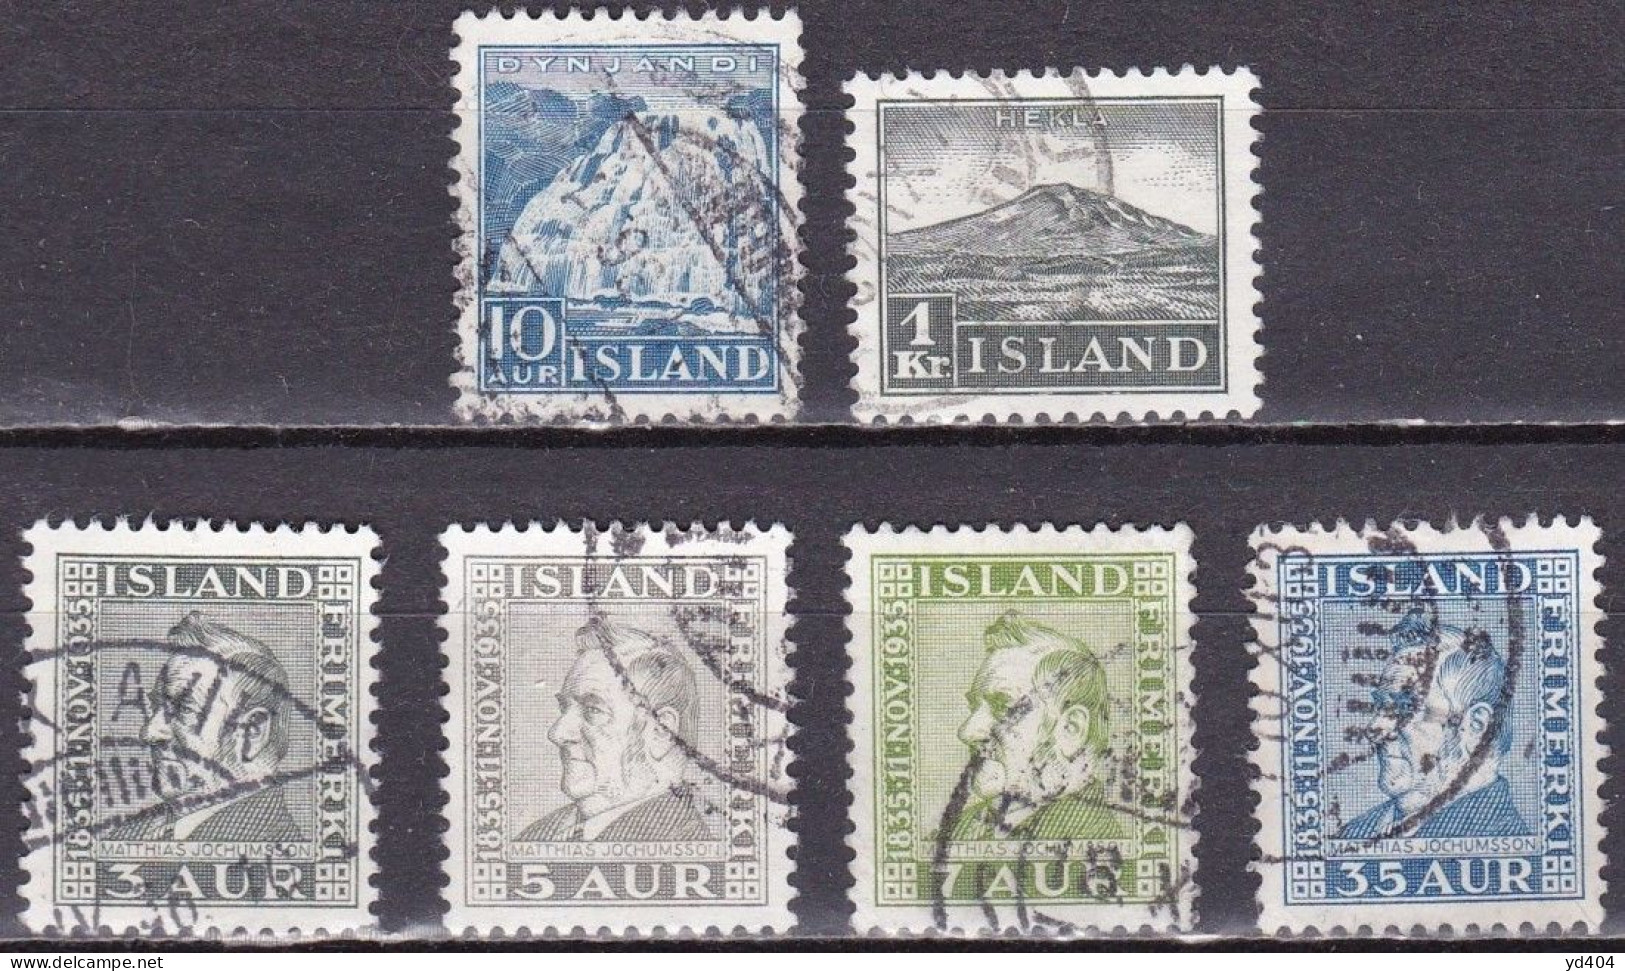 IS032 – ISLANDE – ICELAND – 1935 – FULL YEAR SET – SG # 214/9 USED 11 € - Gebruikt